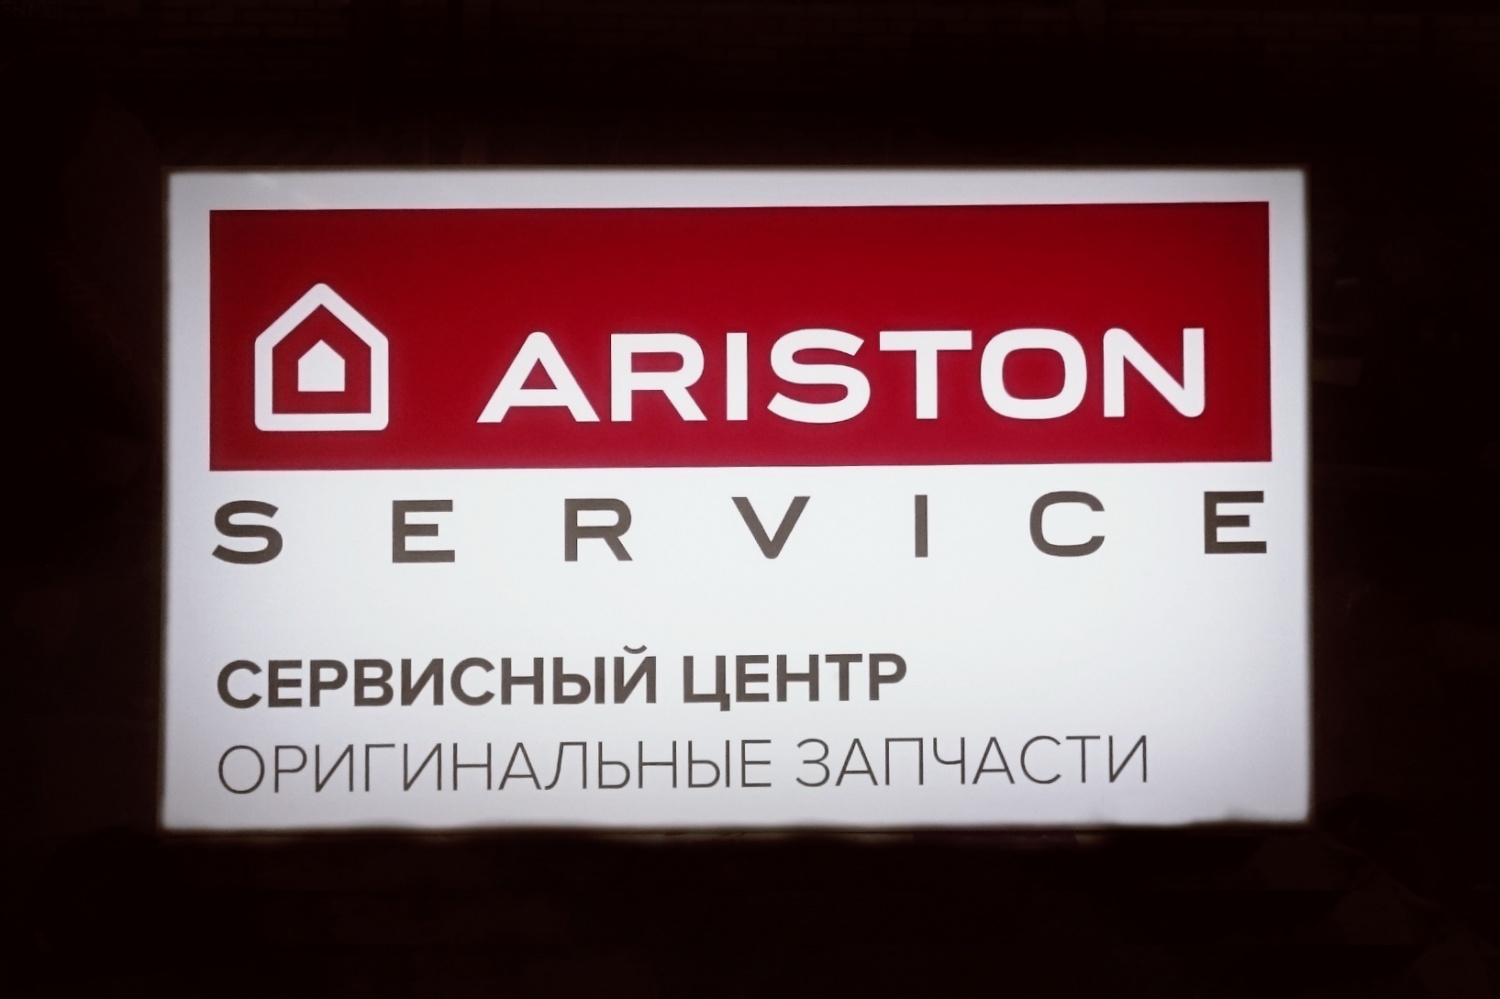 Аристон сервисный ariston help. Сервисный центр Ariston. Фирменный магазин Аристон. Запасные части Аристон. Аристон логотип.